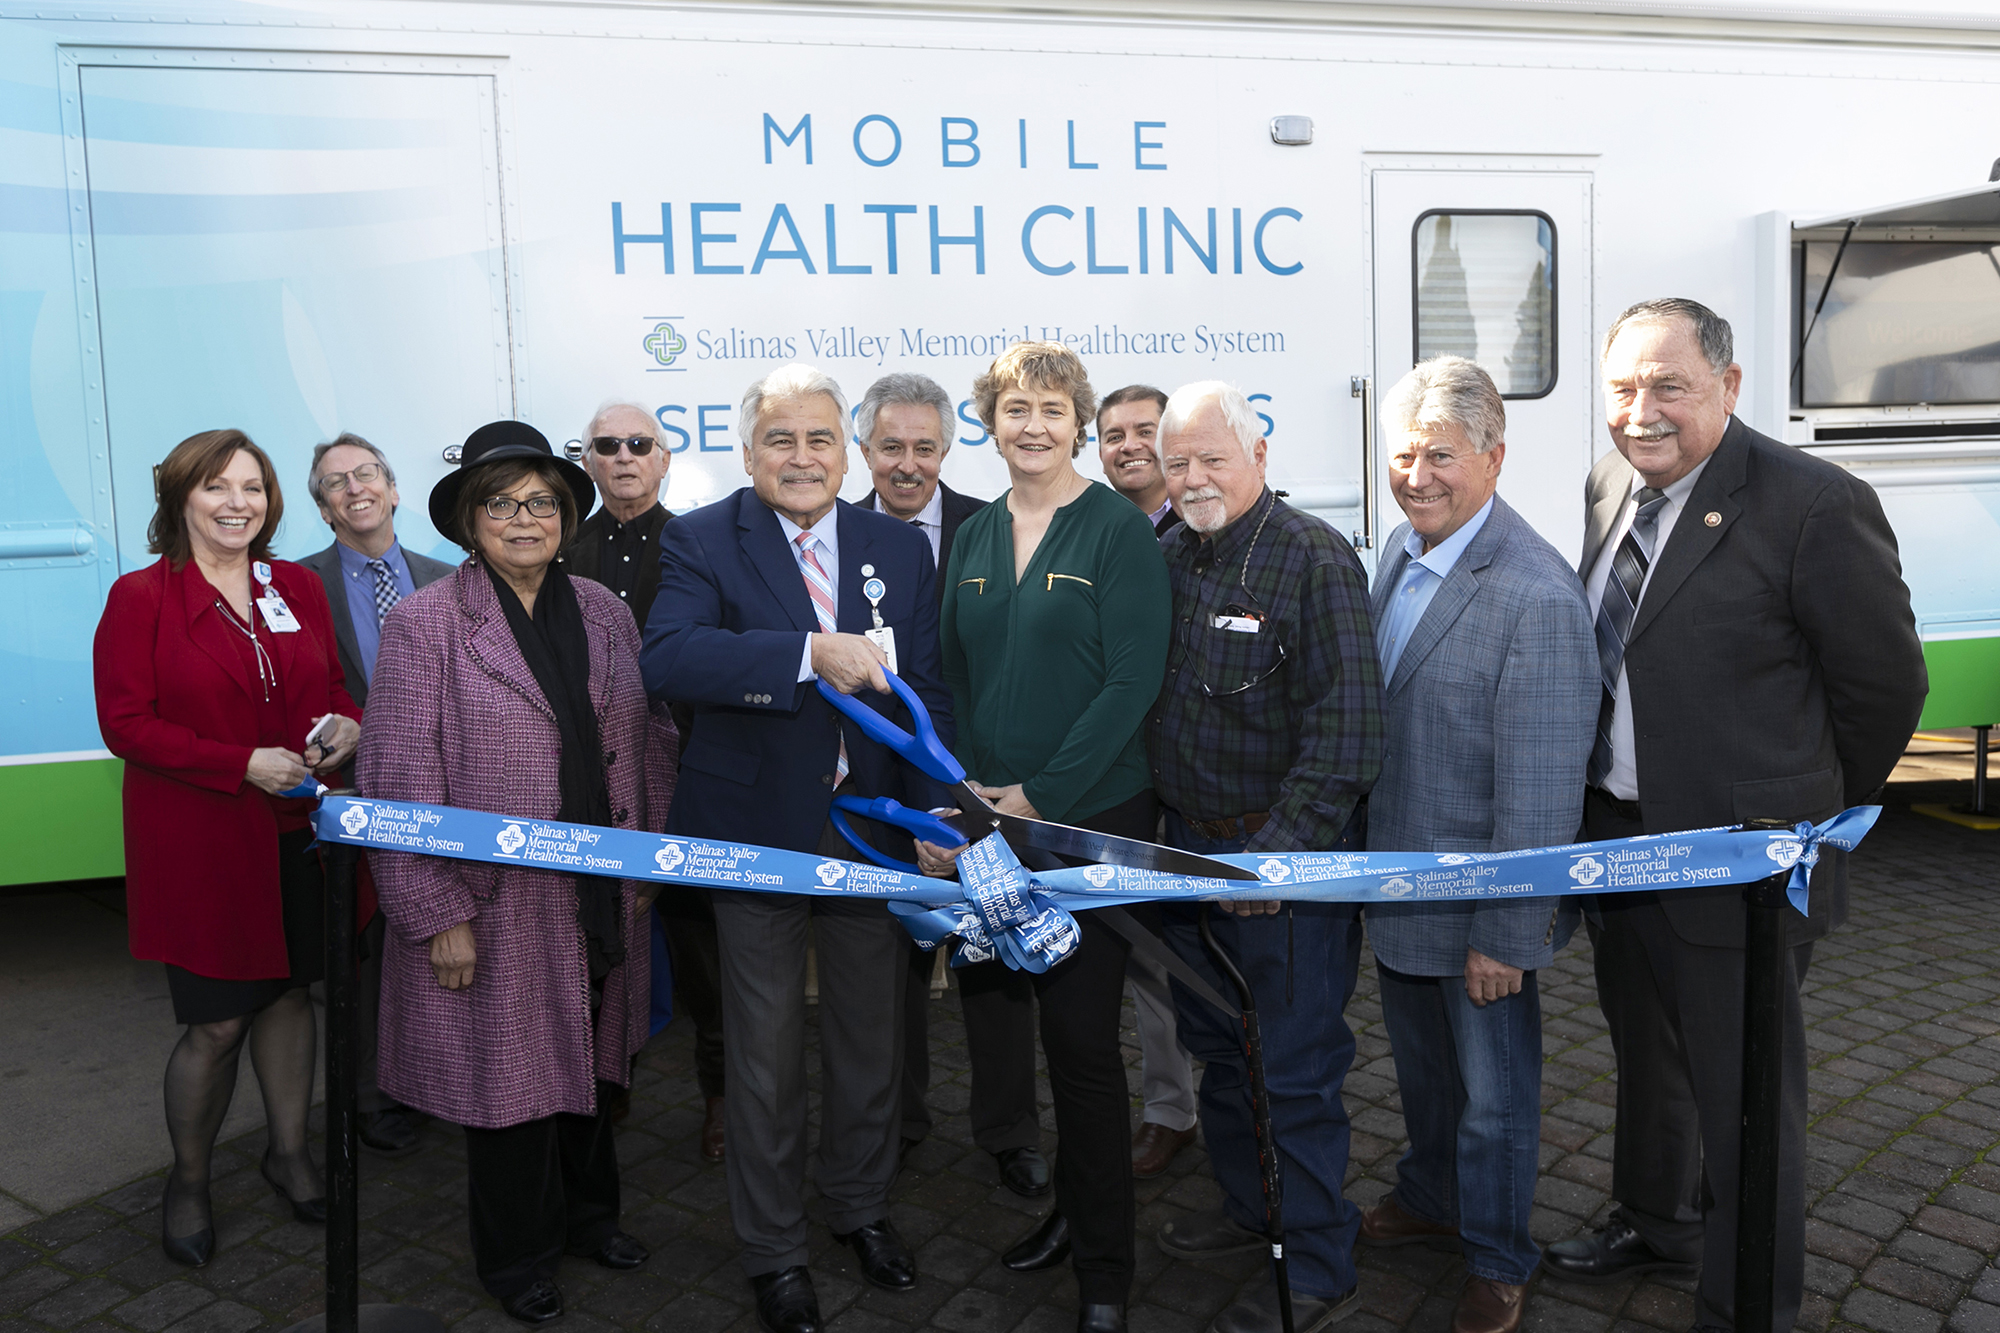 Mobile Health Clinic Team